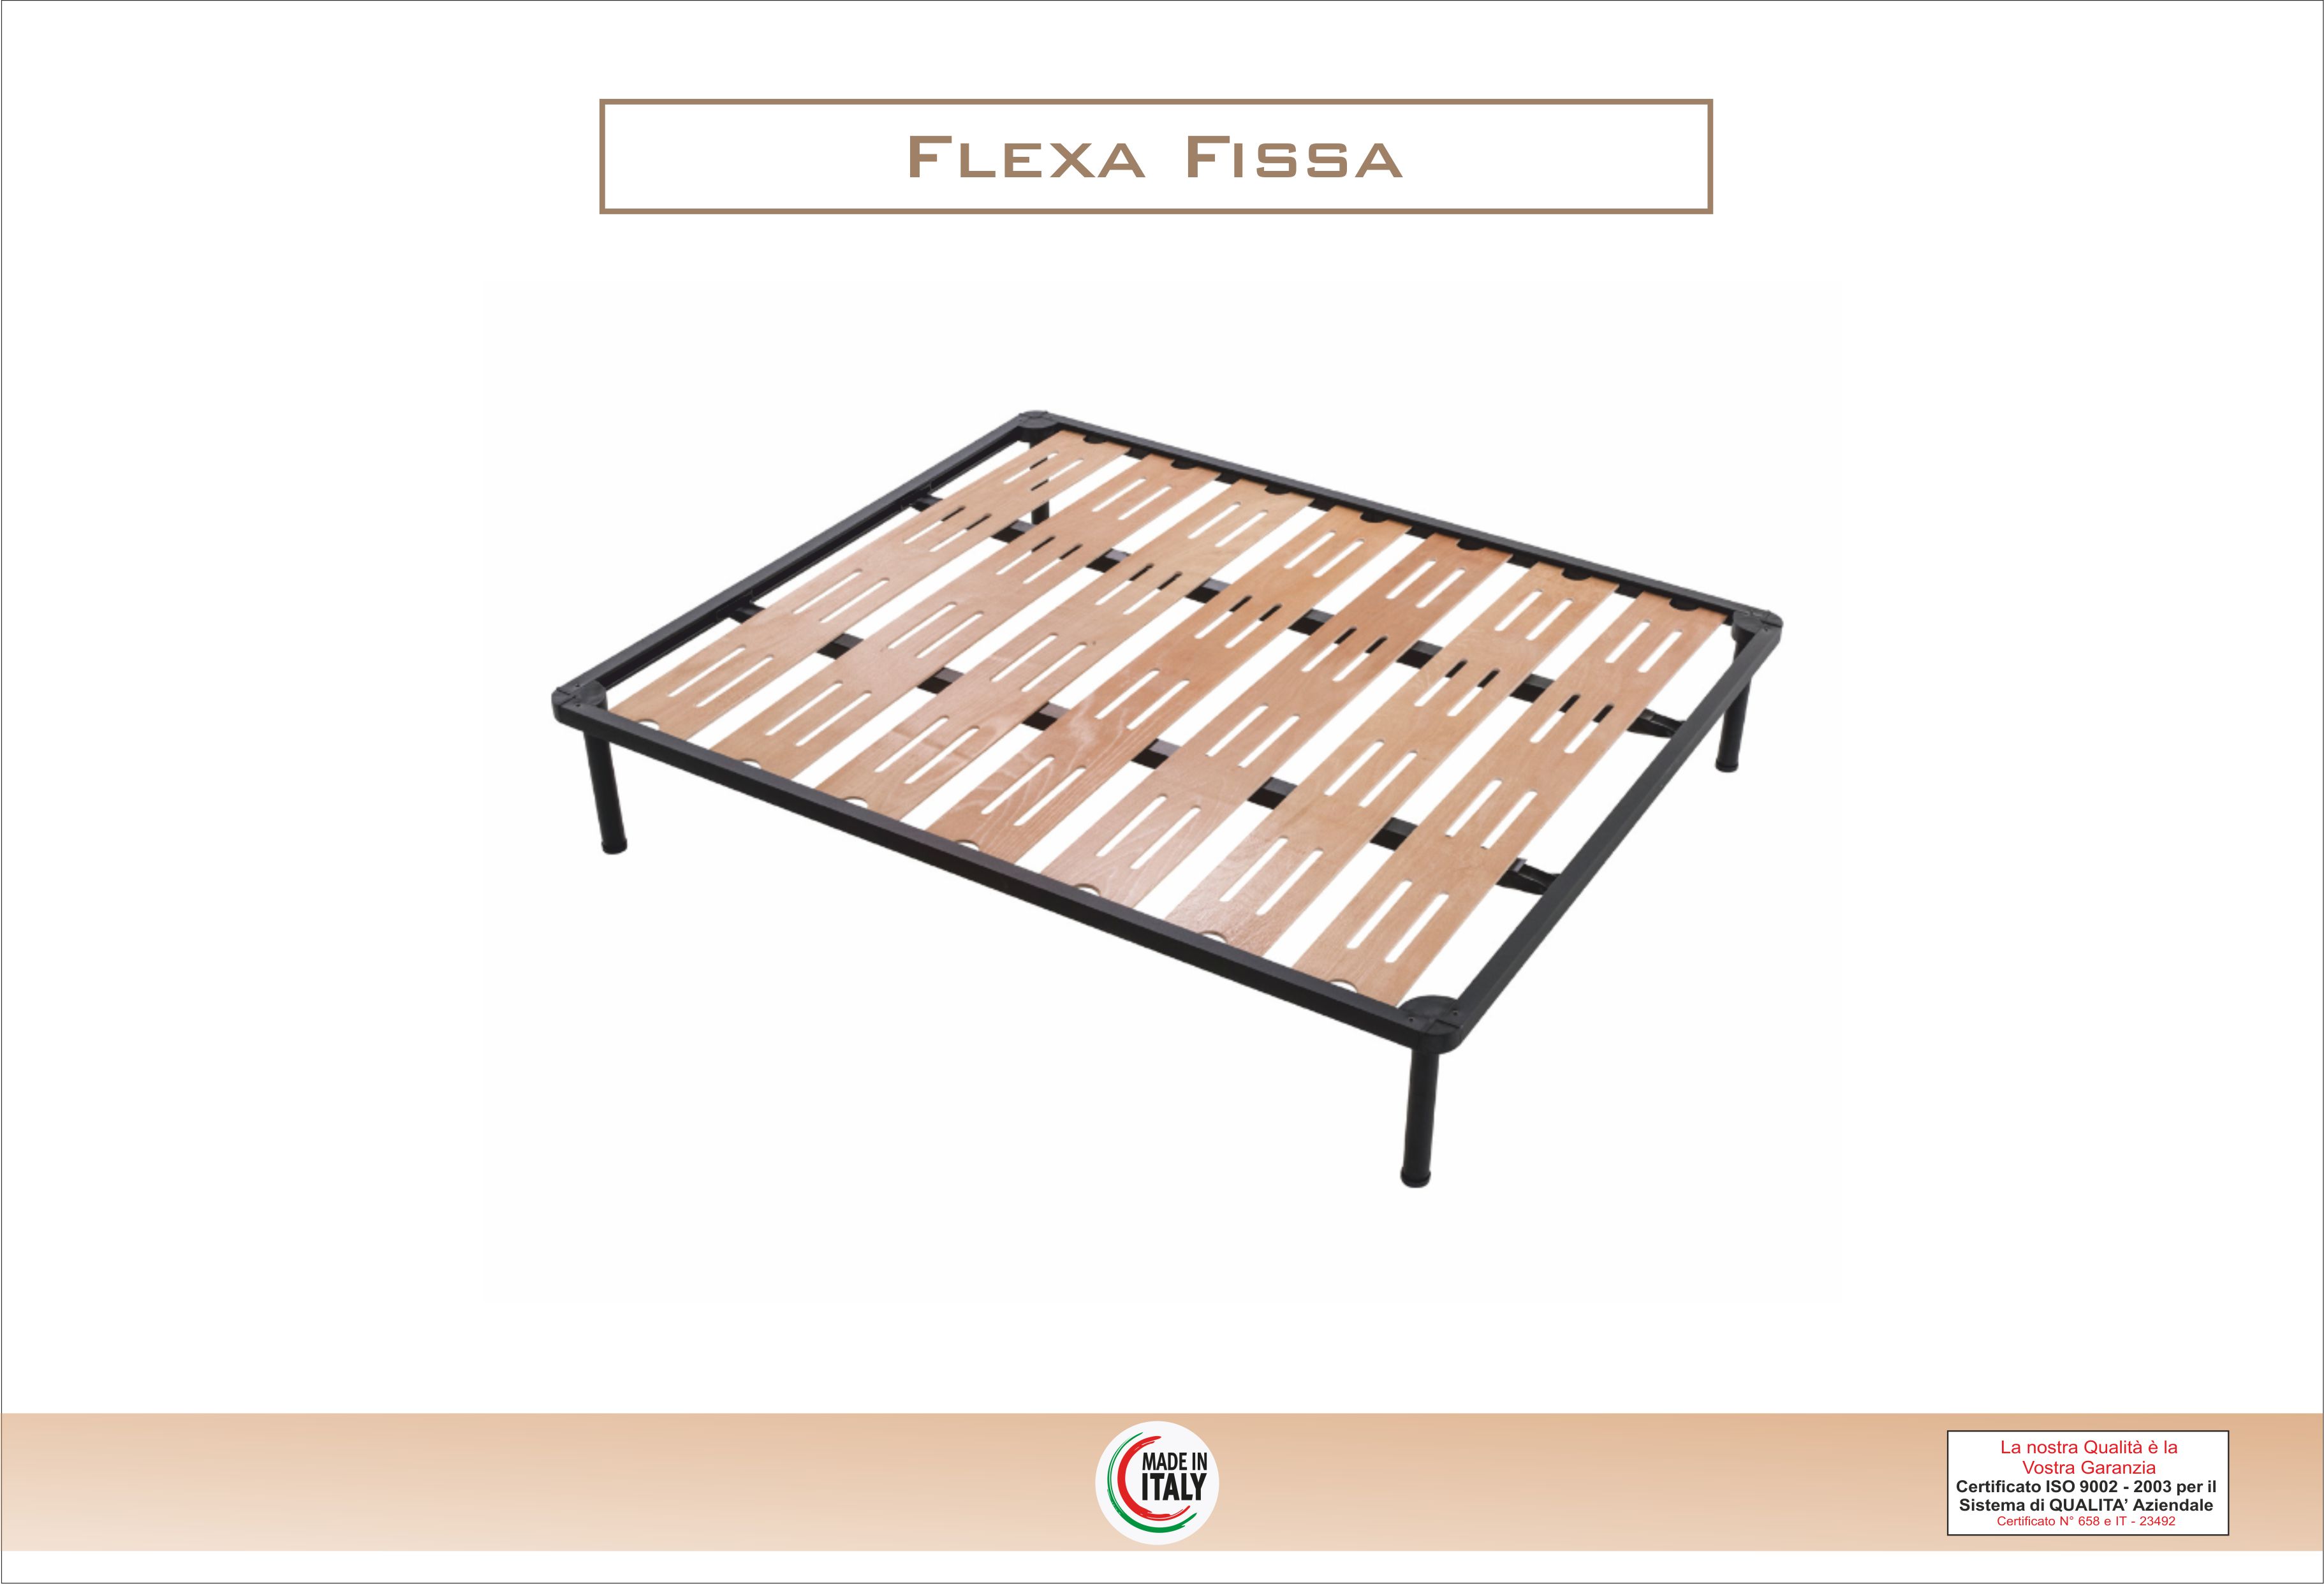 Flexa Fissa